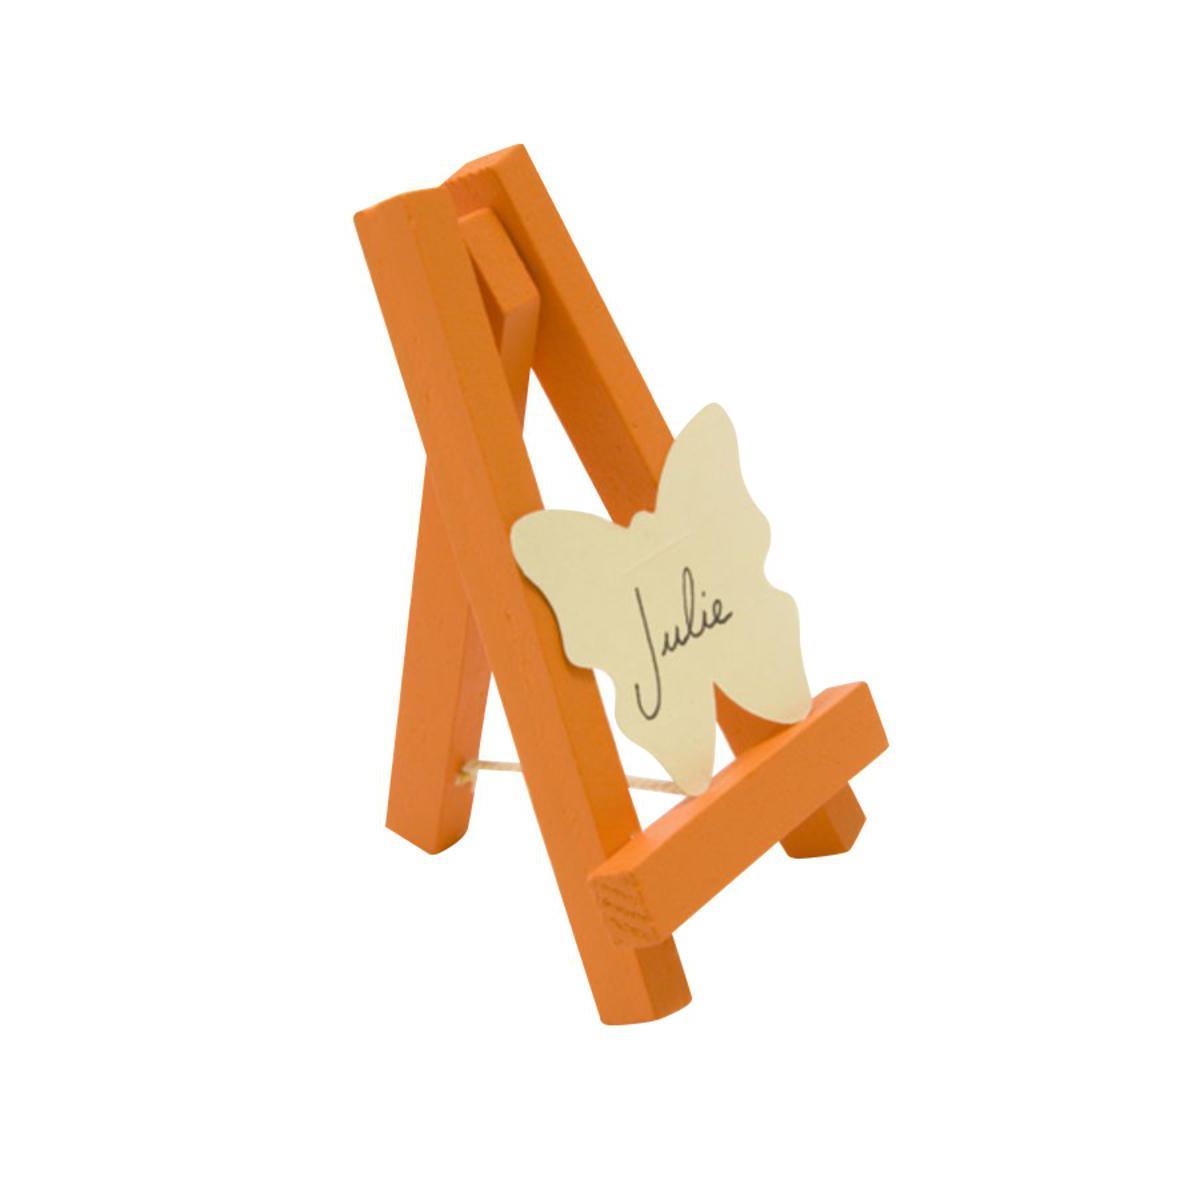 Chevalet peint - Bois - 10 x 6 cm - Orange